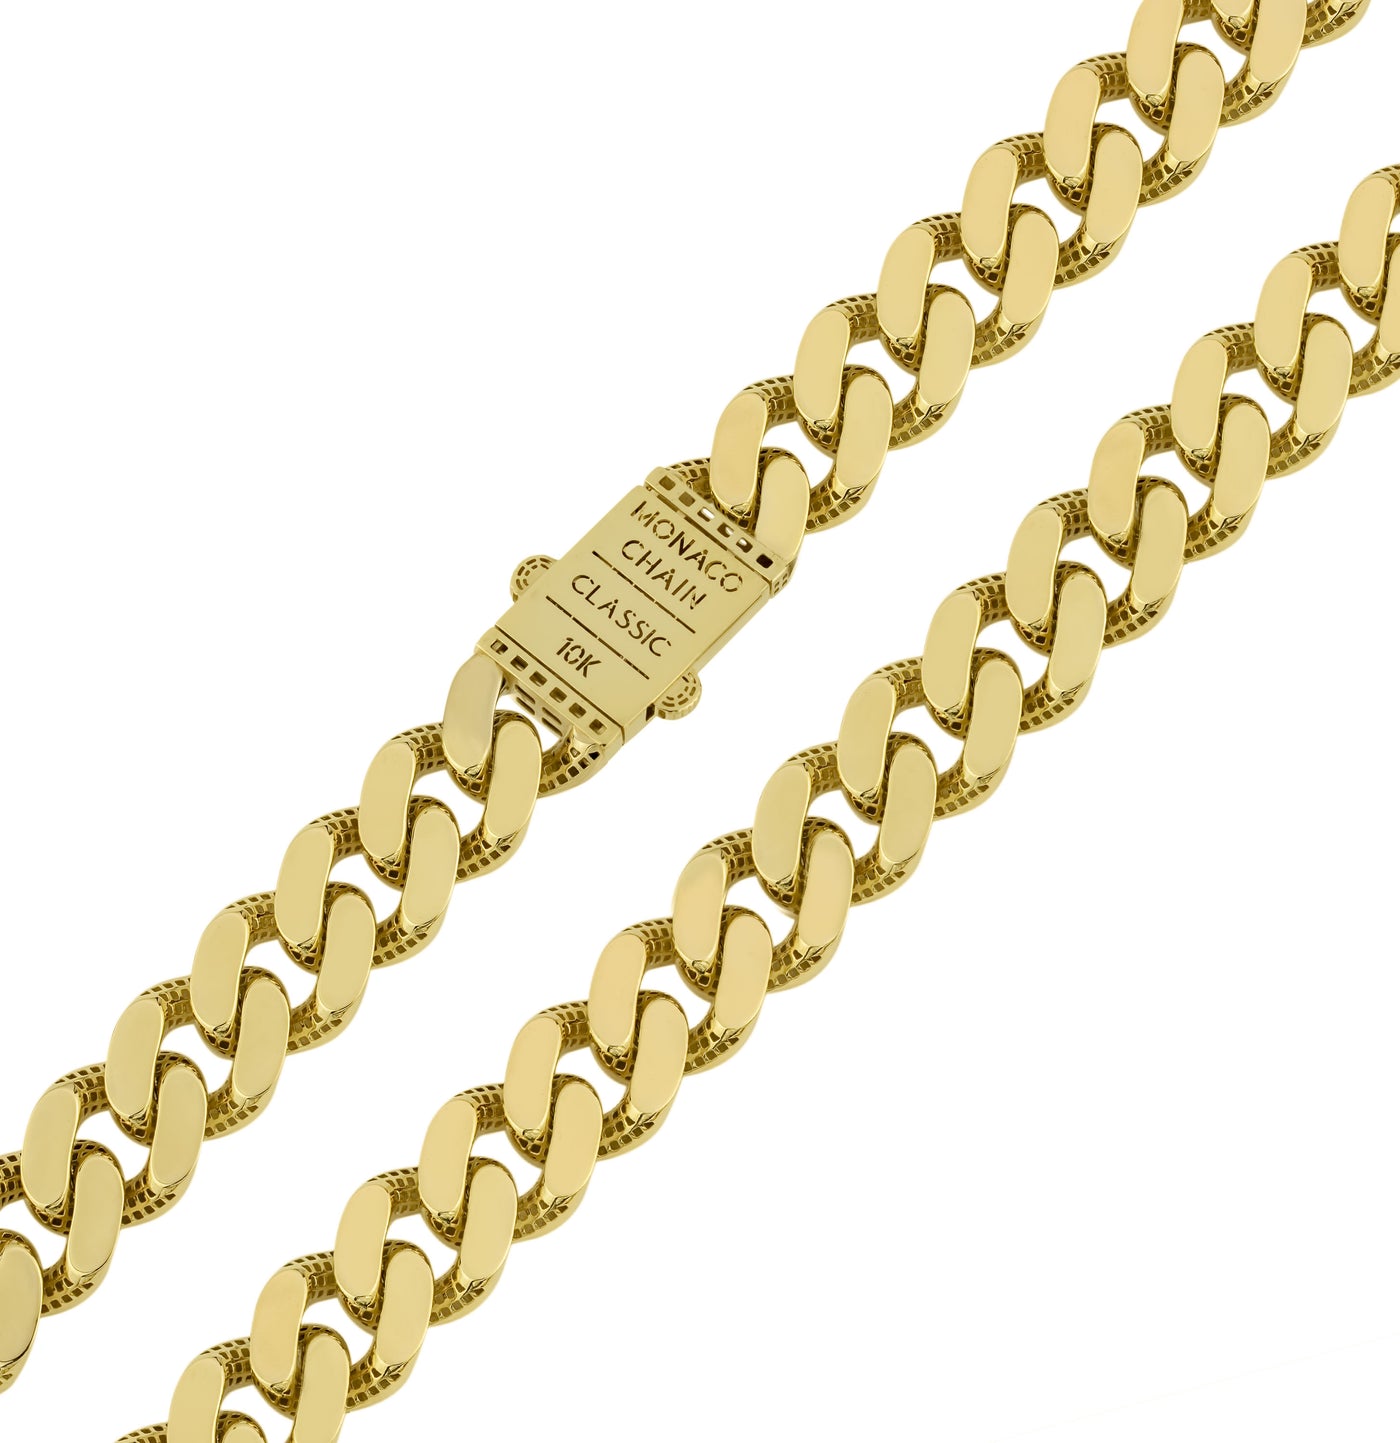 Jewlpire Men's Gold Chain Necklace